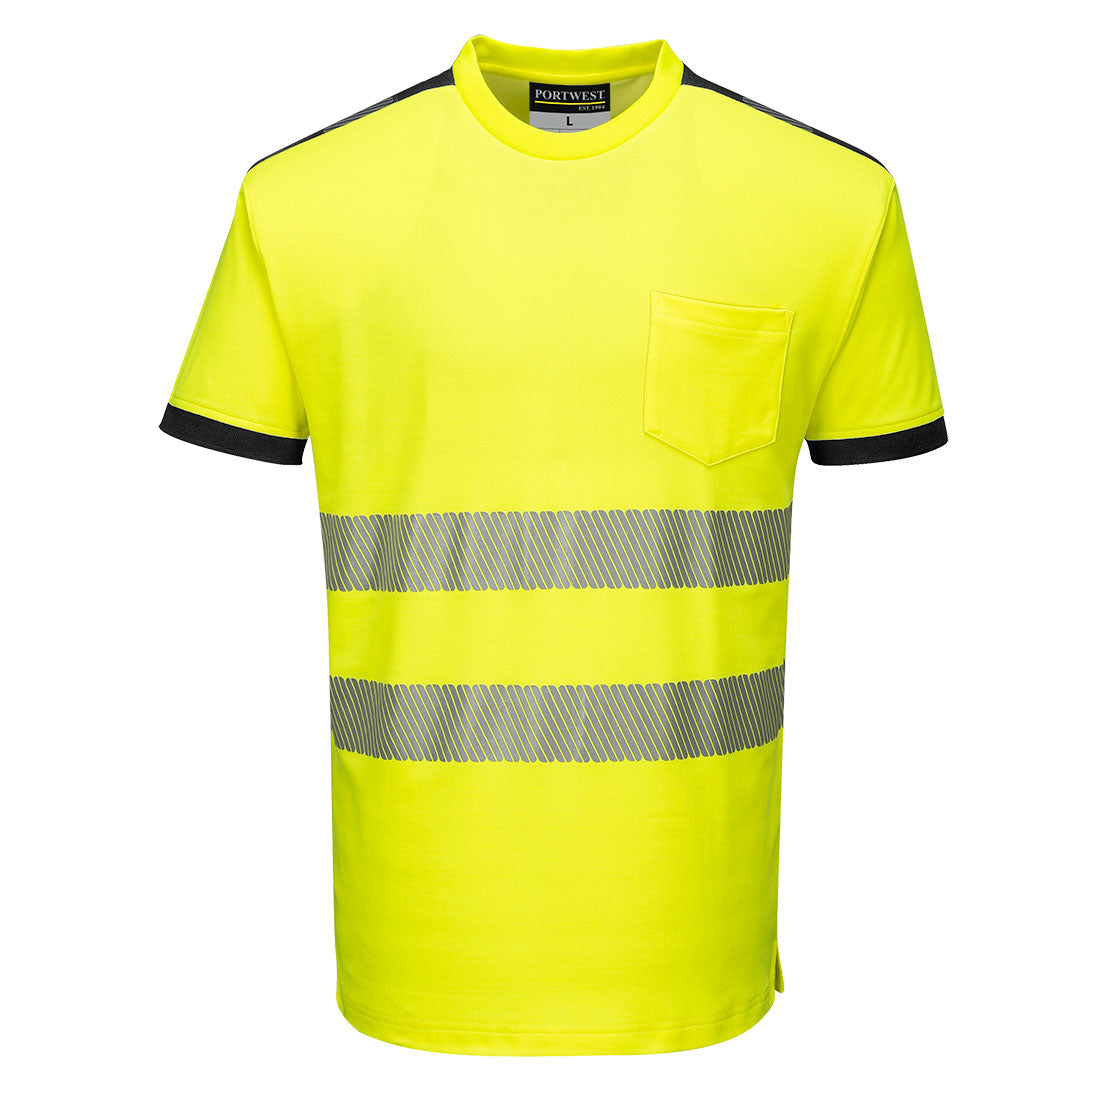 Portwest T181 - Yellow/Black Sz 5XL PW3 Hi-Vis Short Sleeved T-Shirt Viz Visibilty